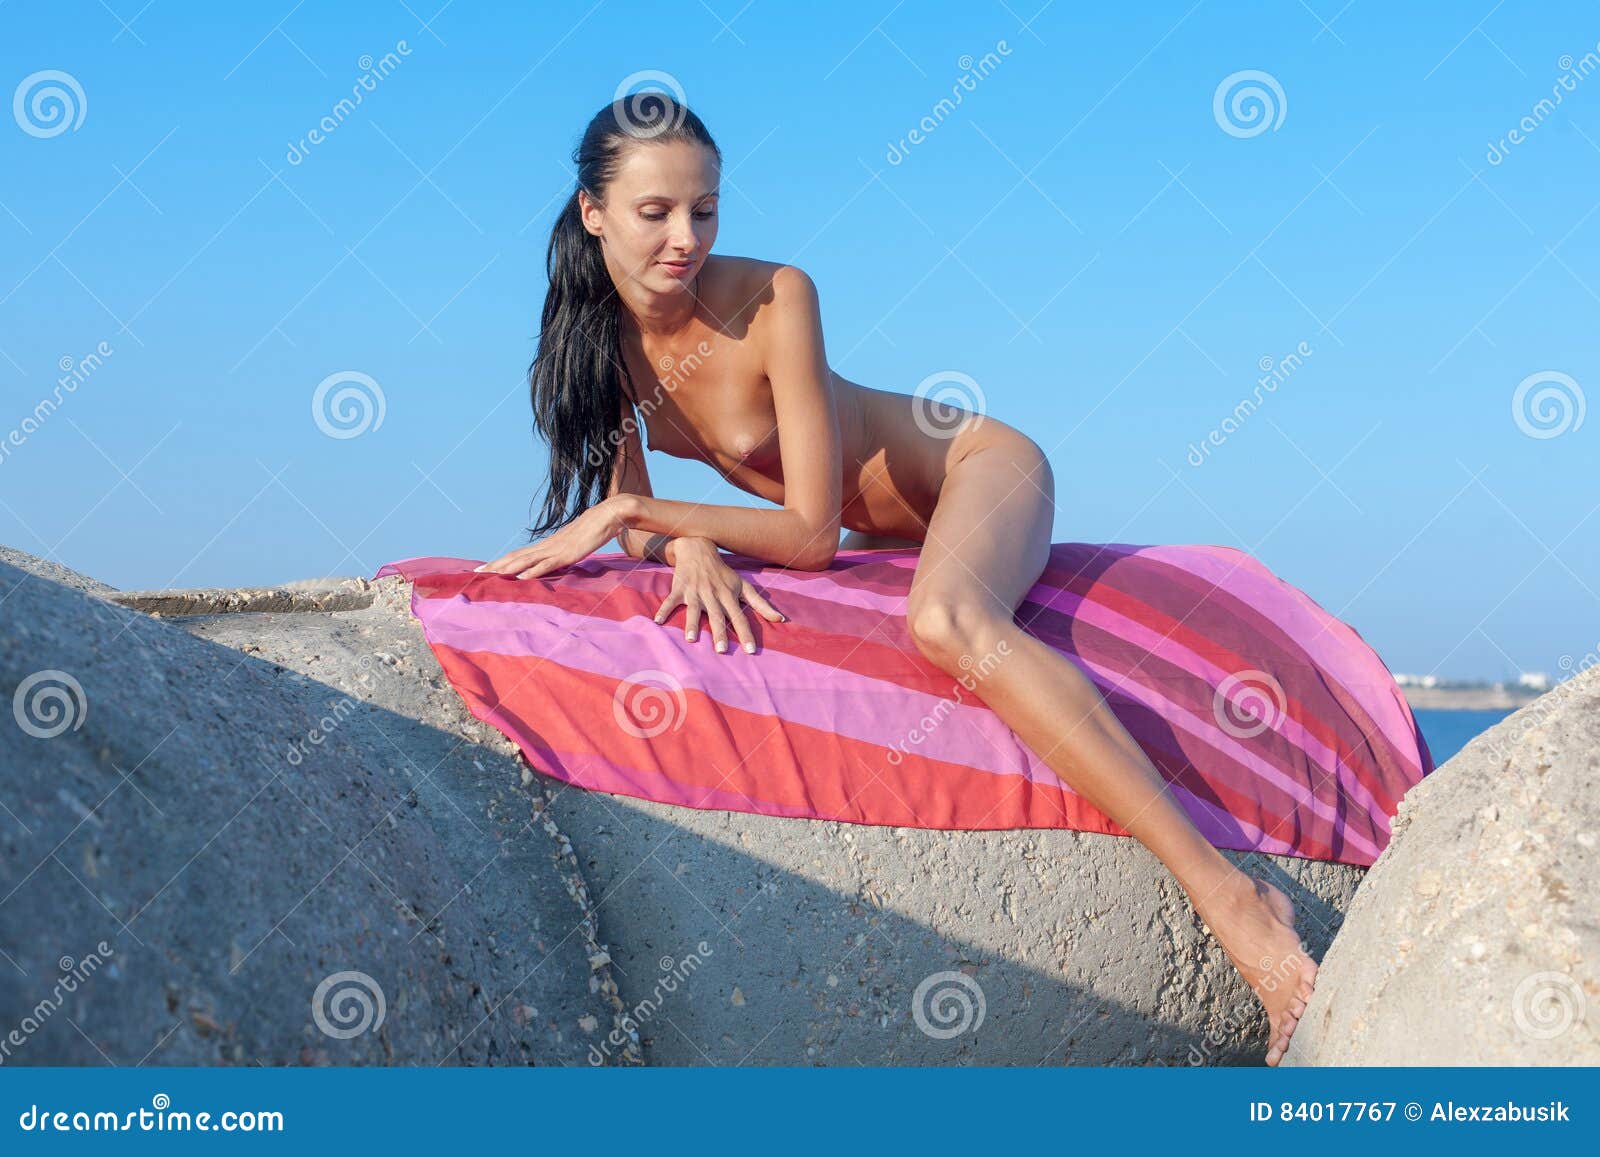 carolina przybek recommends Girls Sunbathing In The Nude